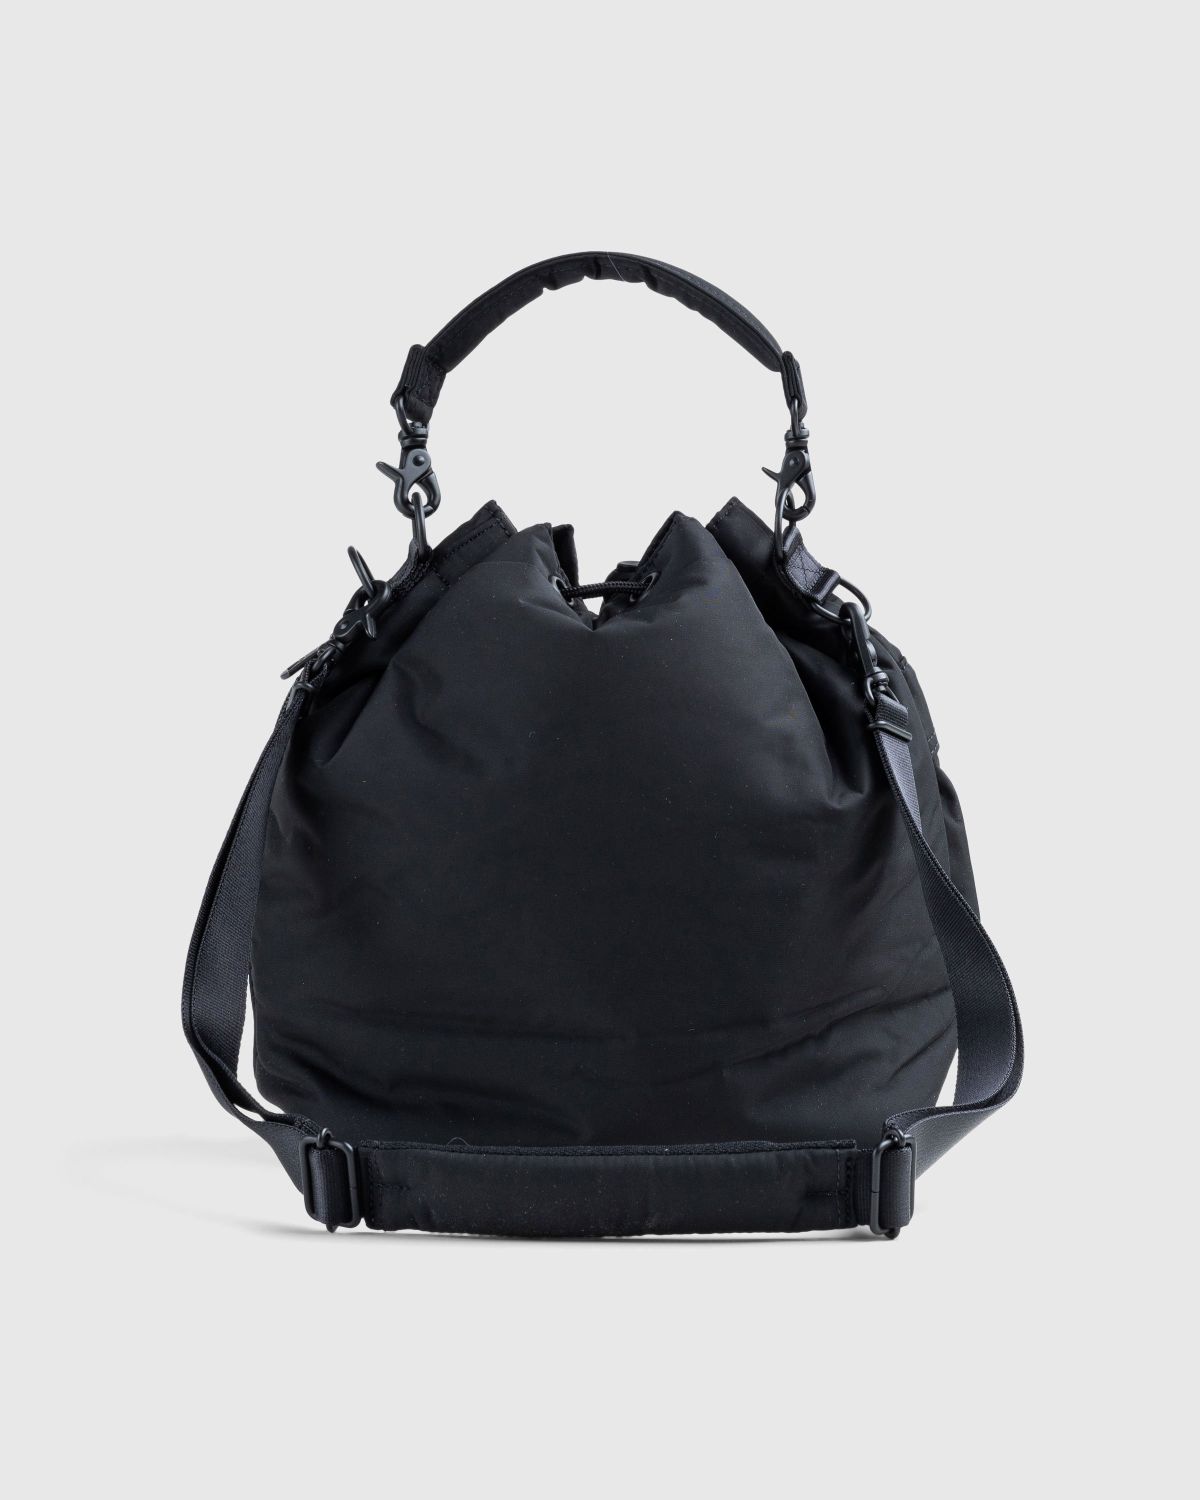 Porter-Yoshida & Co. – Senses Tool Bag Black